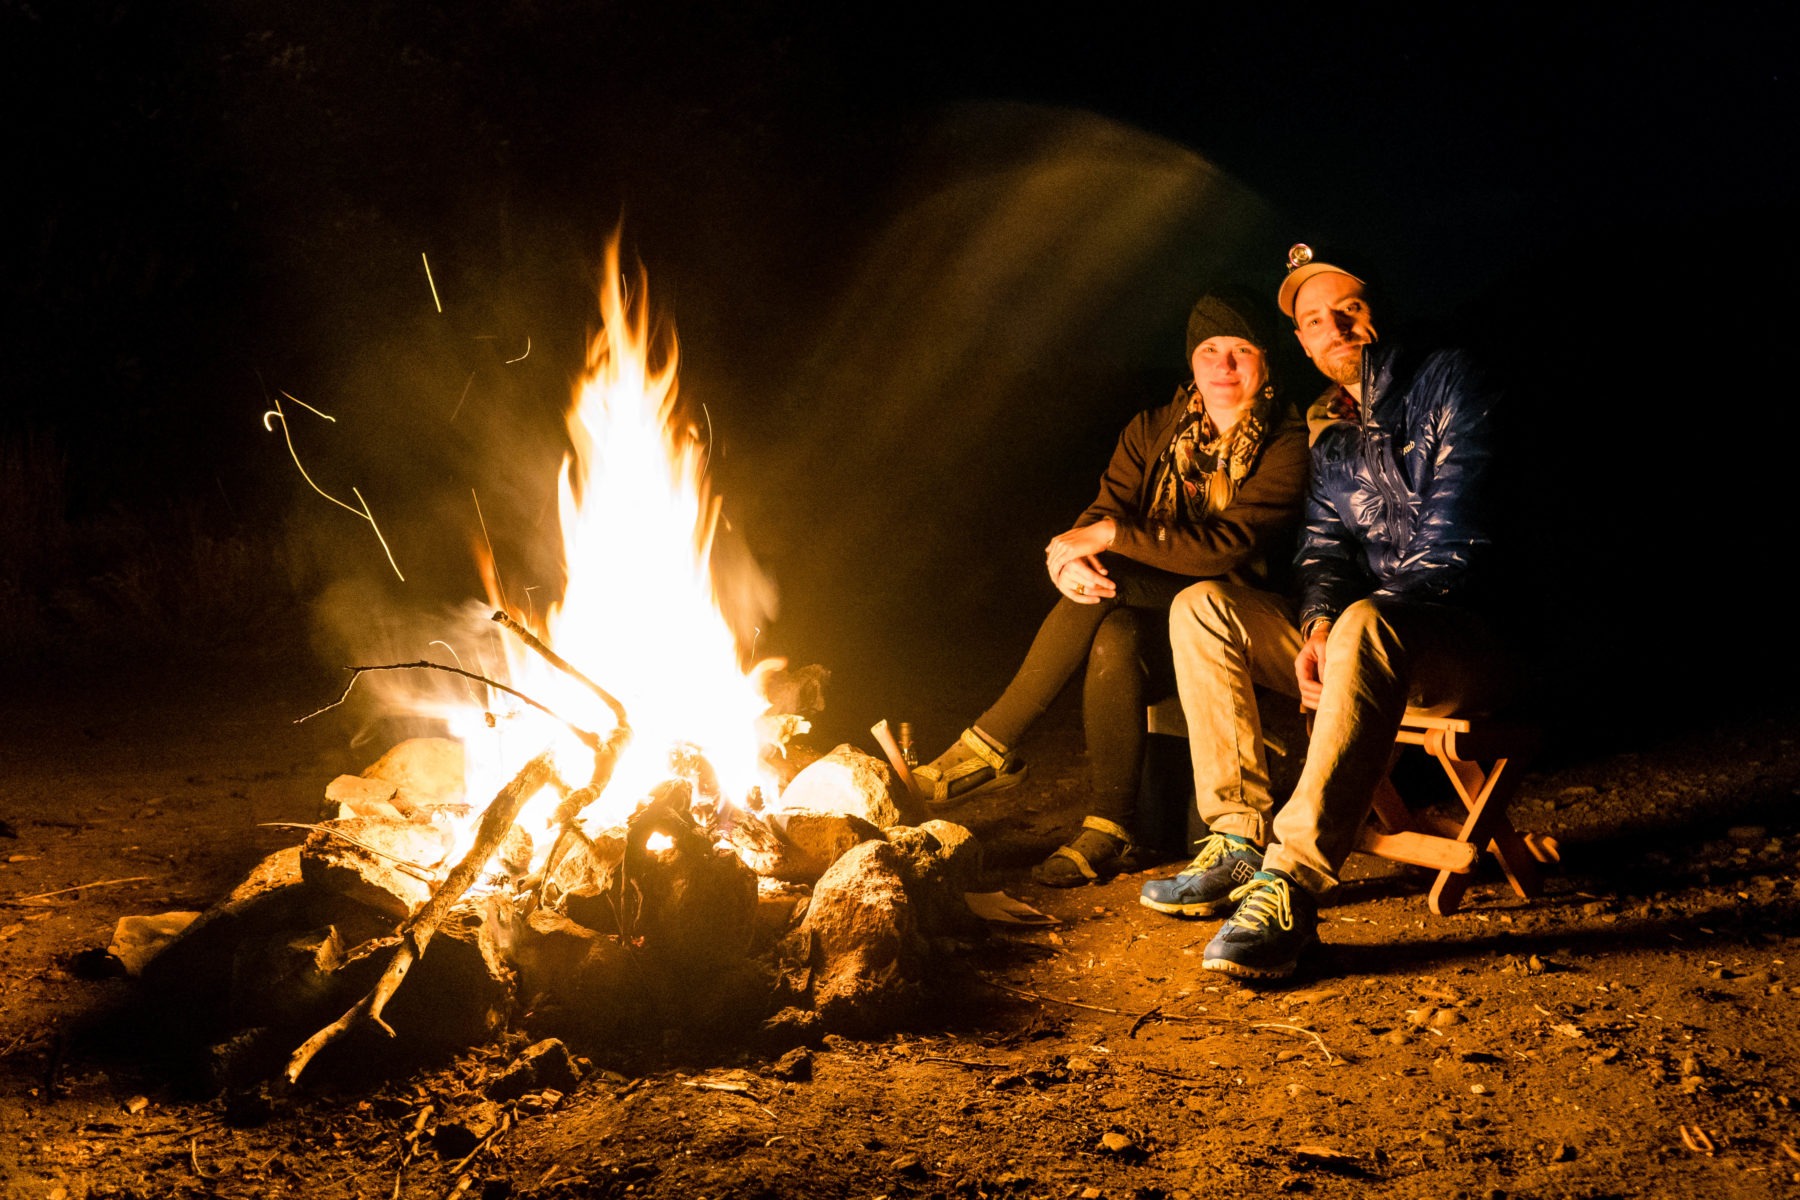 Our campfire at our campsite on Bureau of Land Management Land